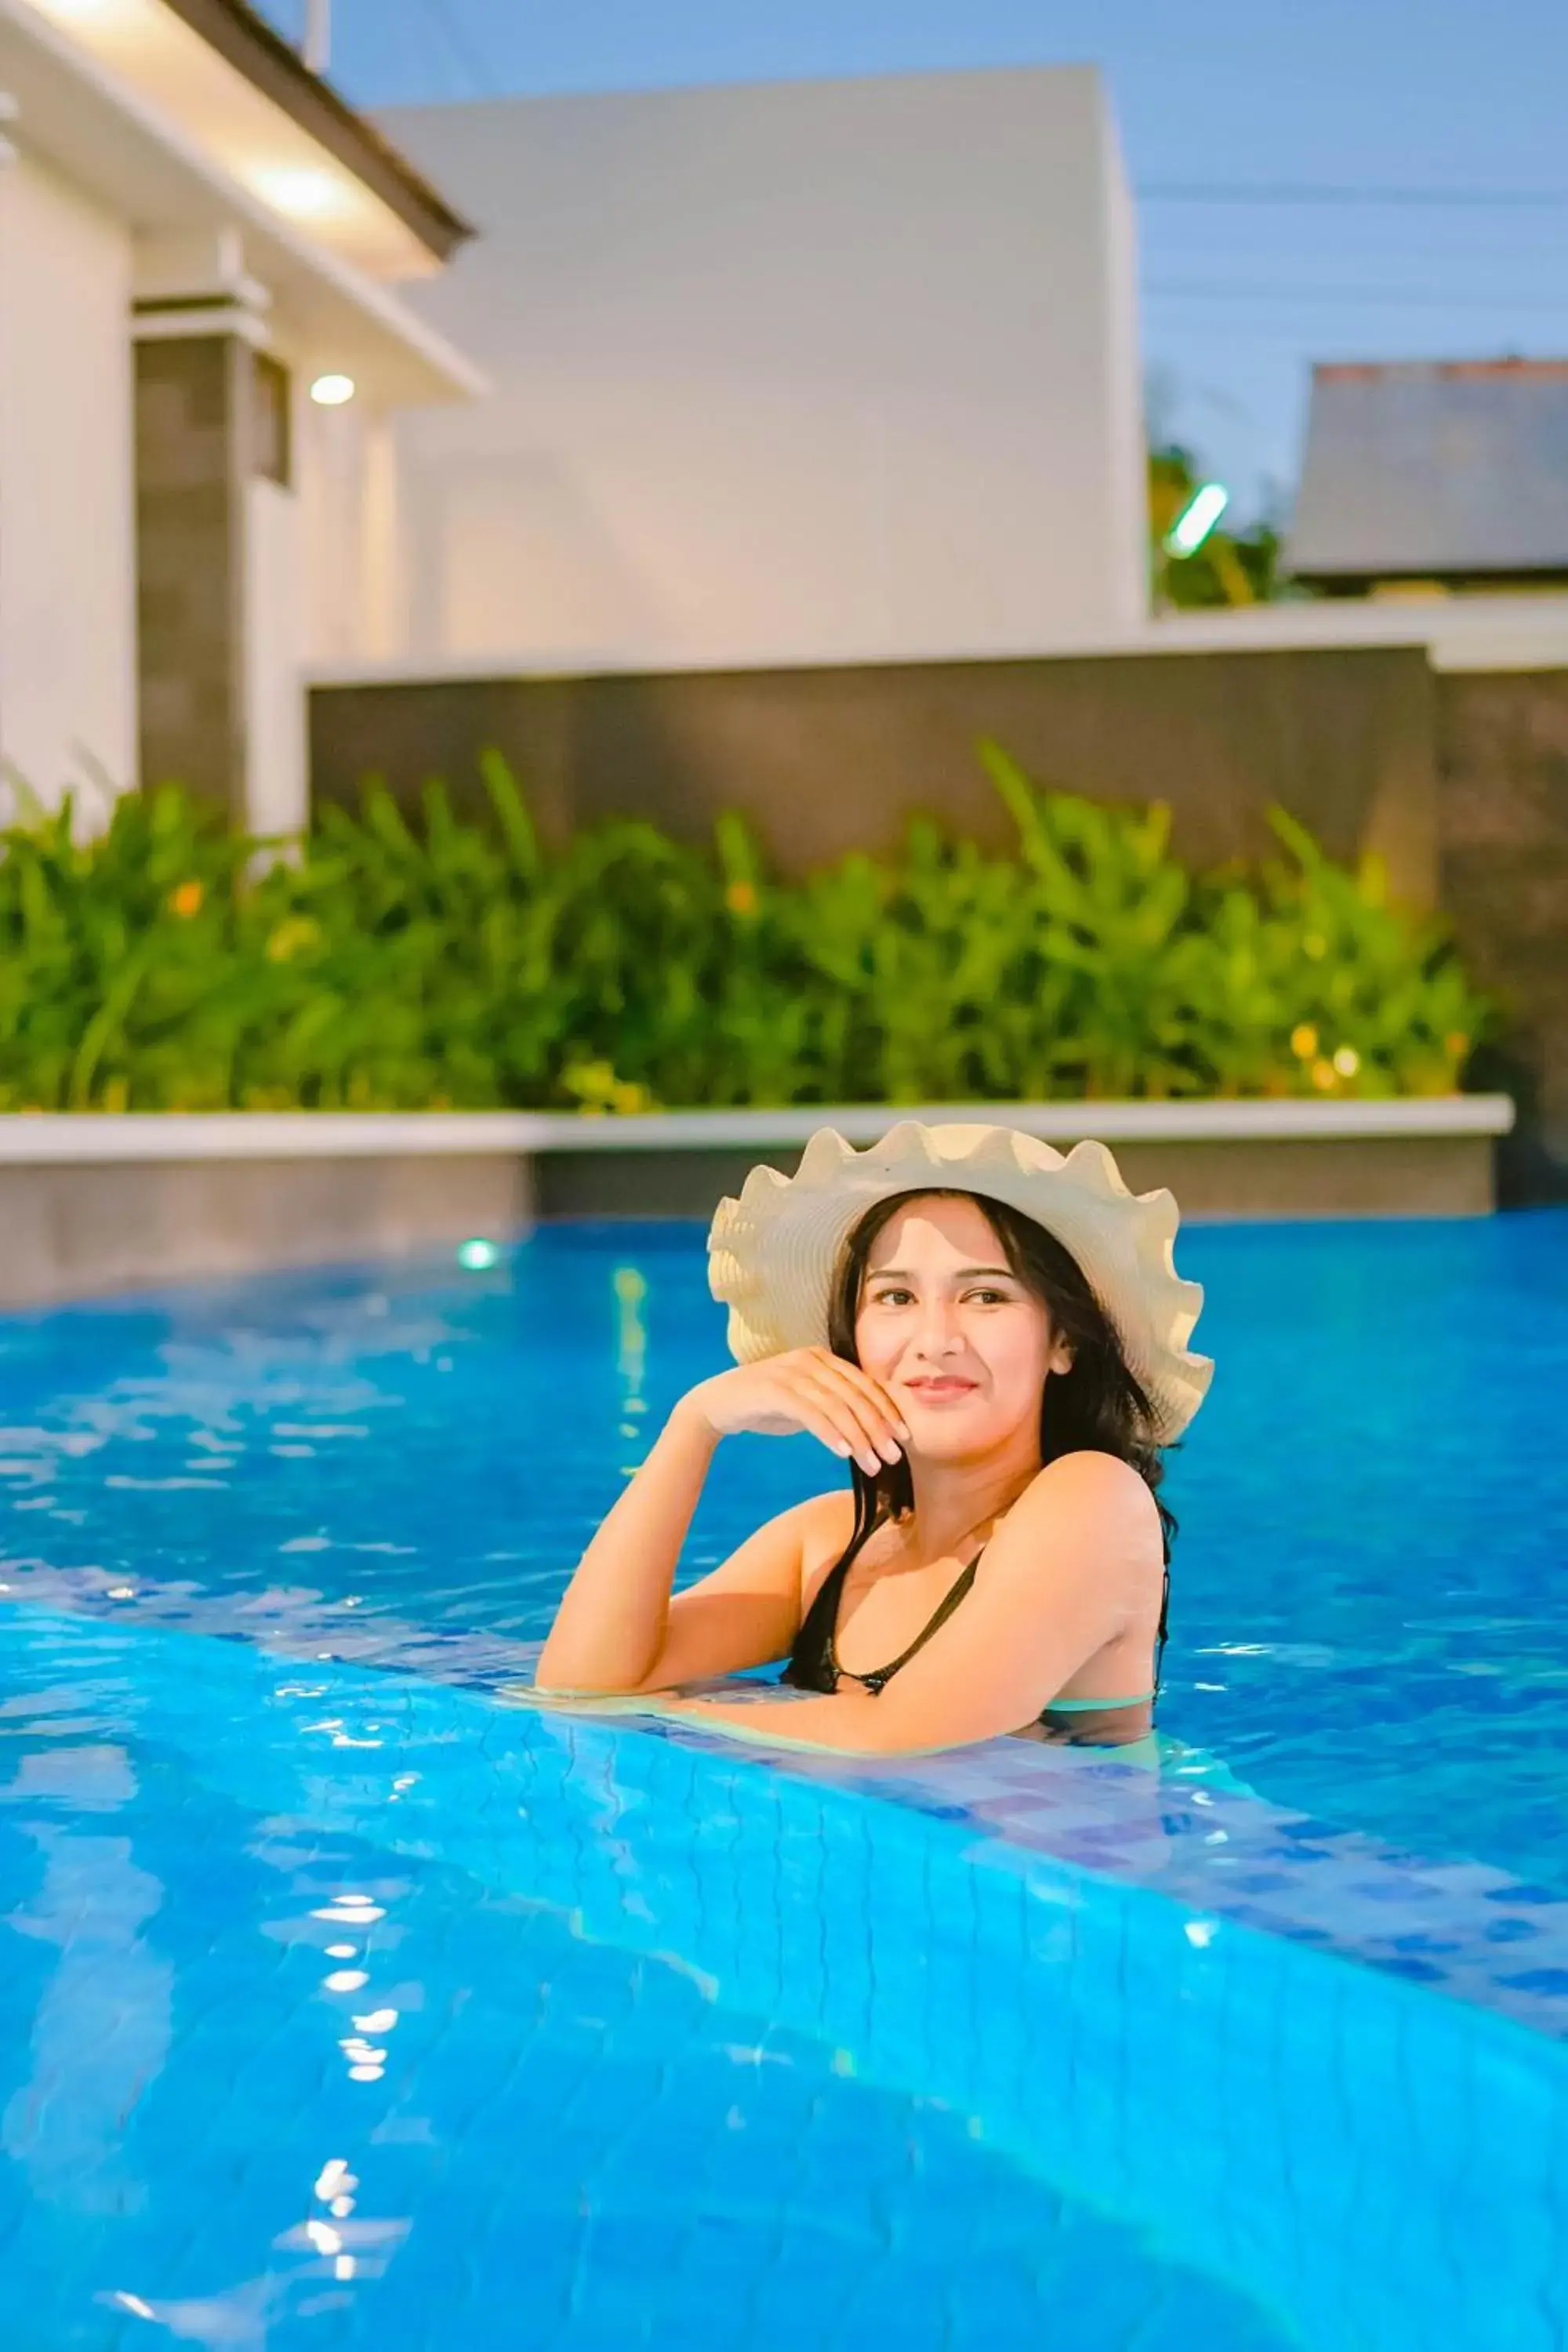 Swimming Pool in Sahid T-More Hotel